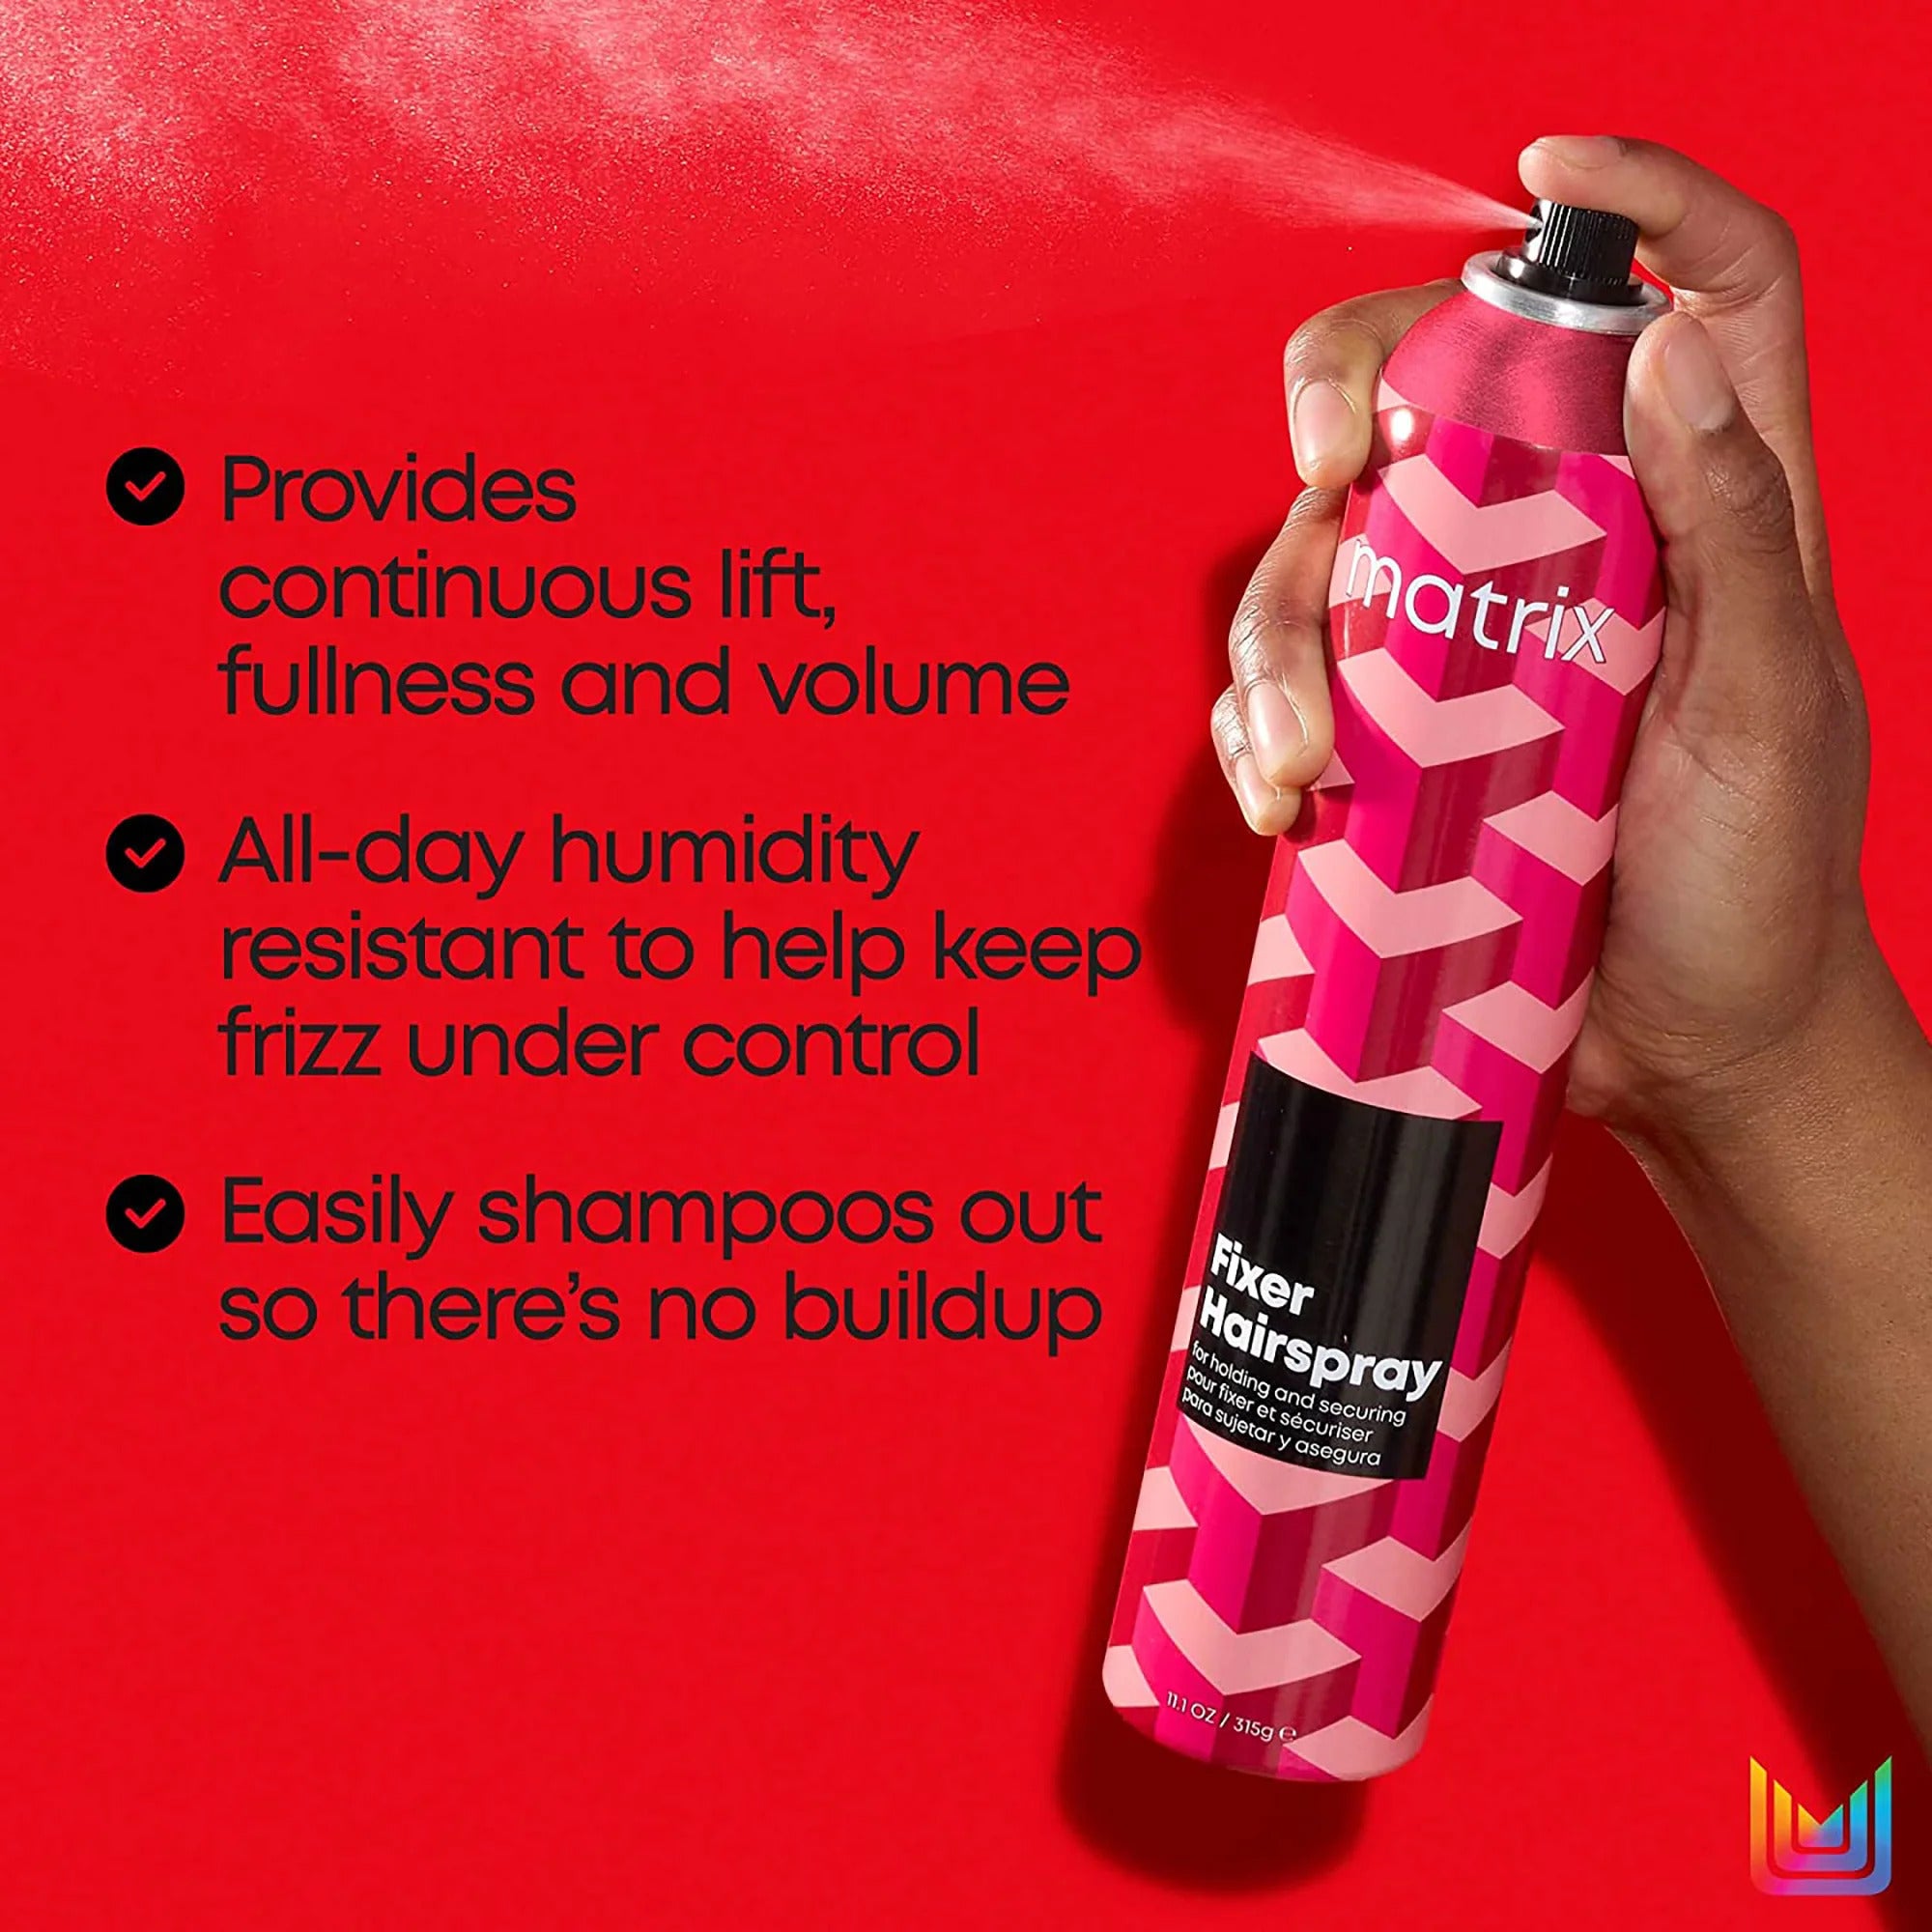 Matrix Fixer Hair Spray Benefits